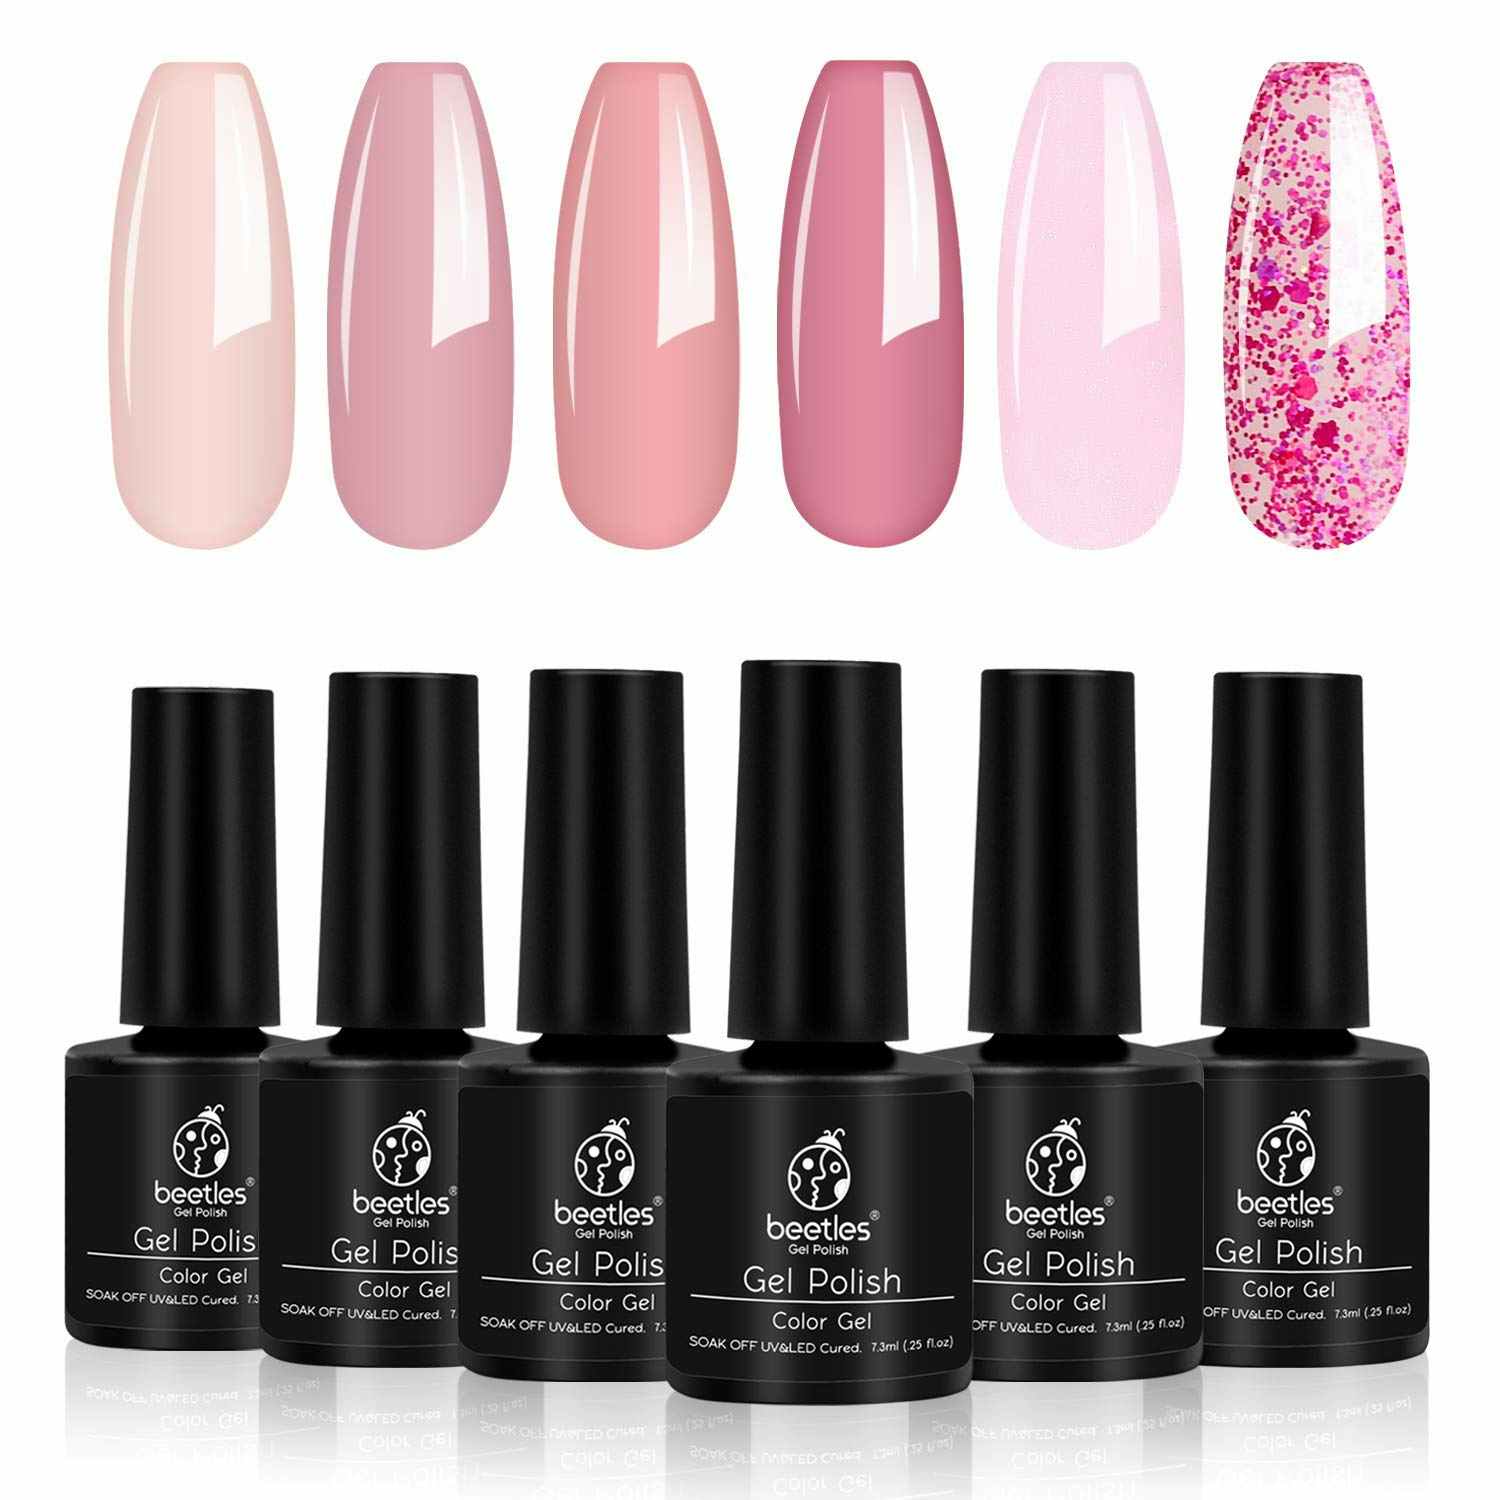 A set of six pink Beetles nail polish bottles.